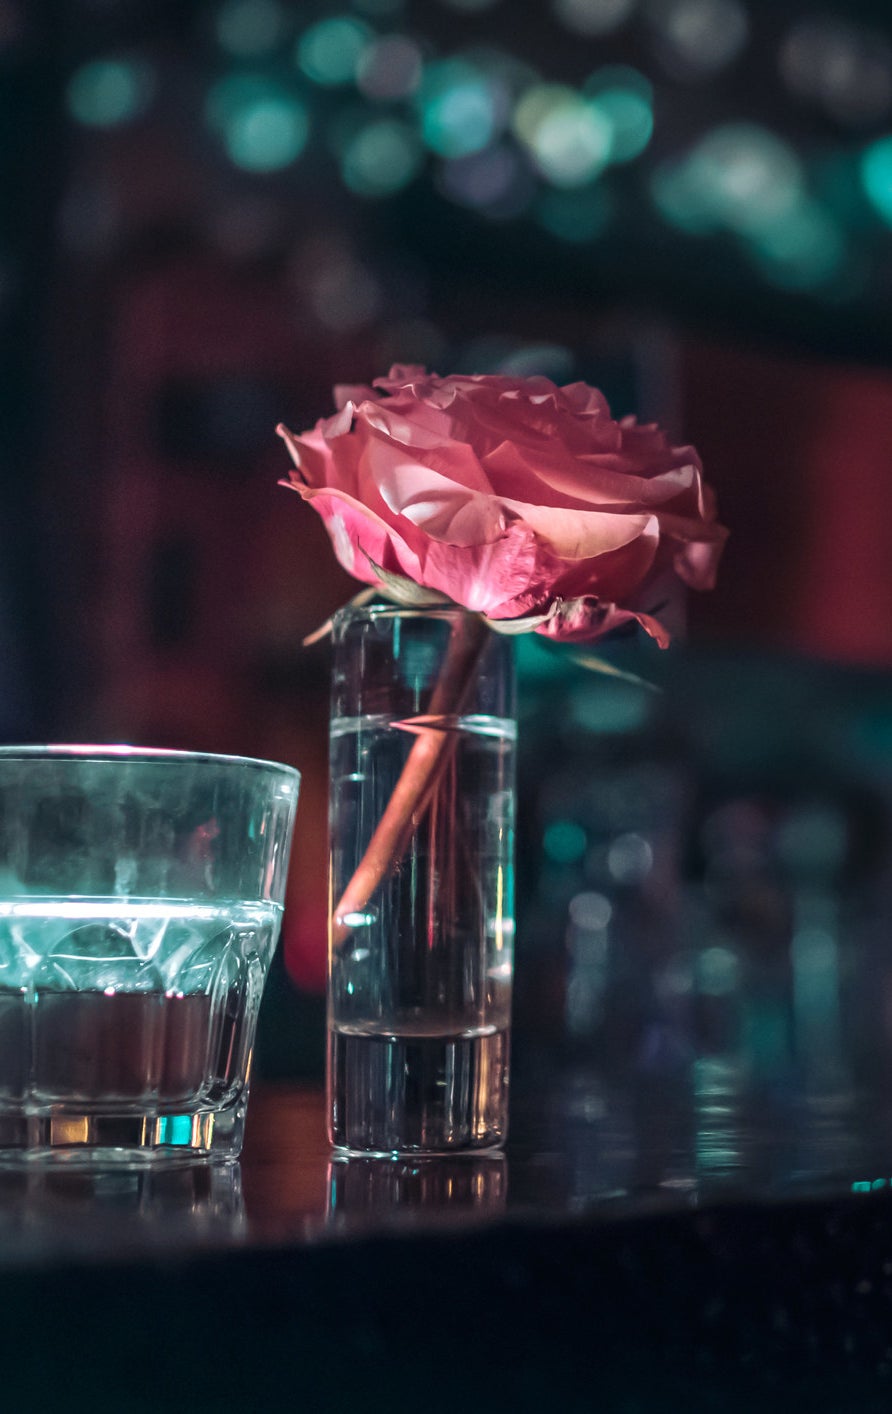 rose and glass at bar